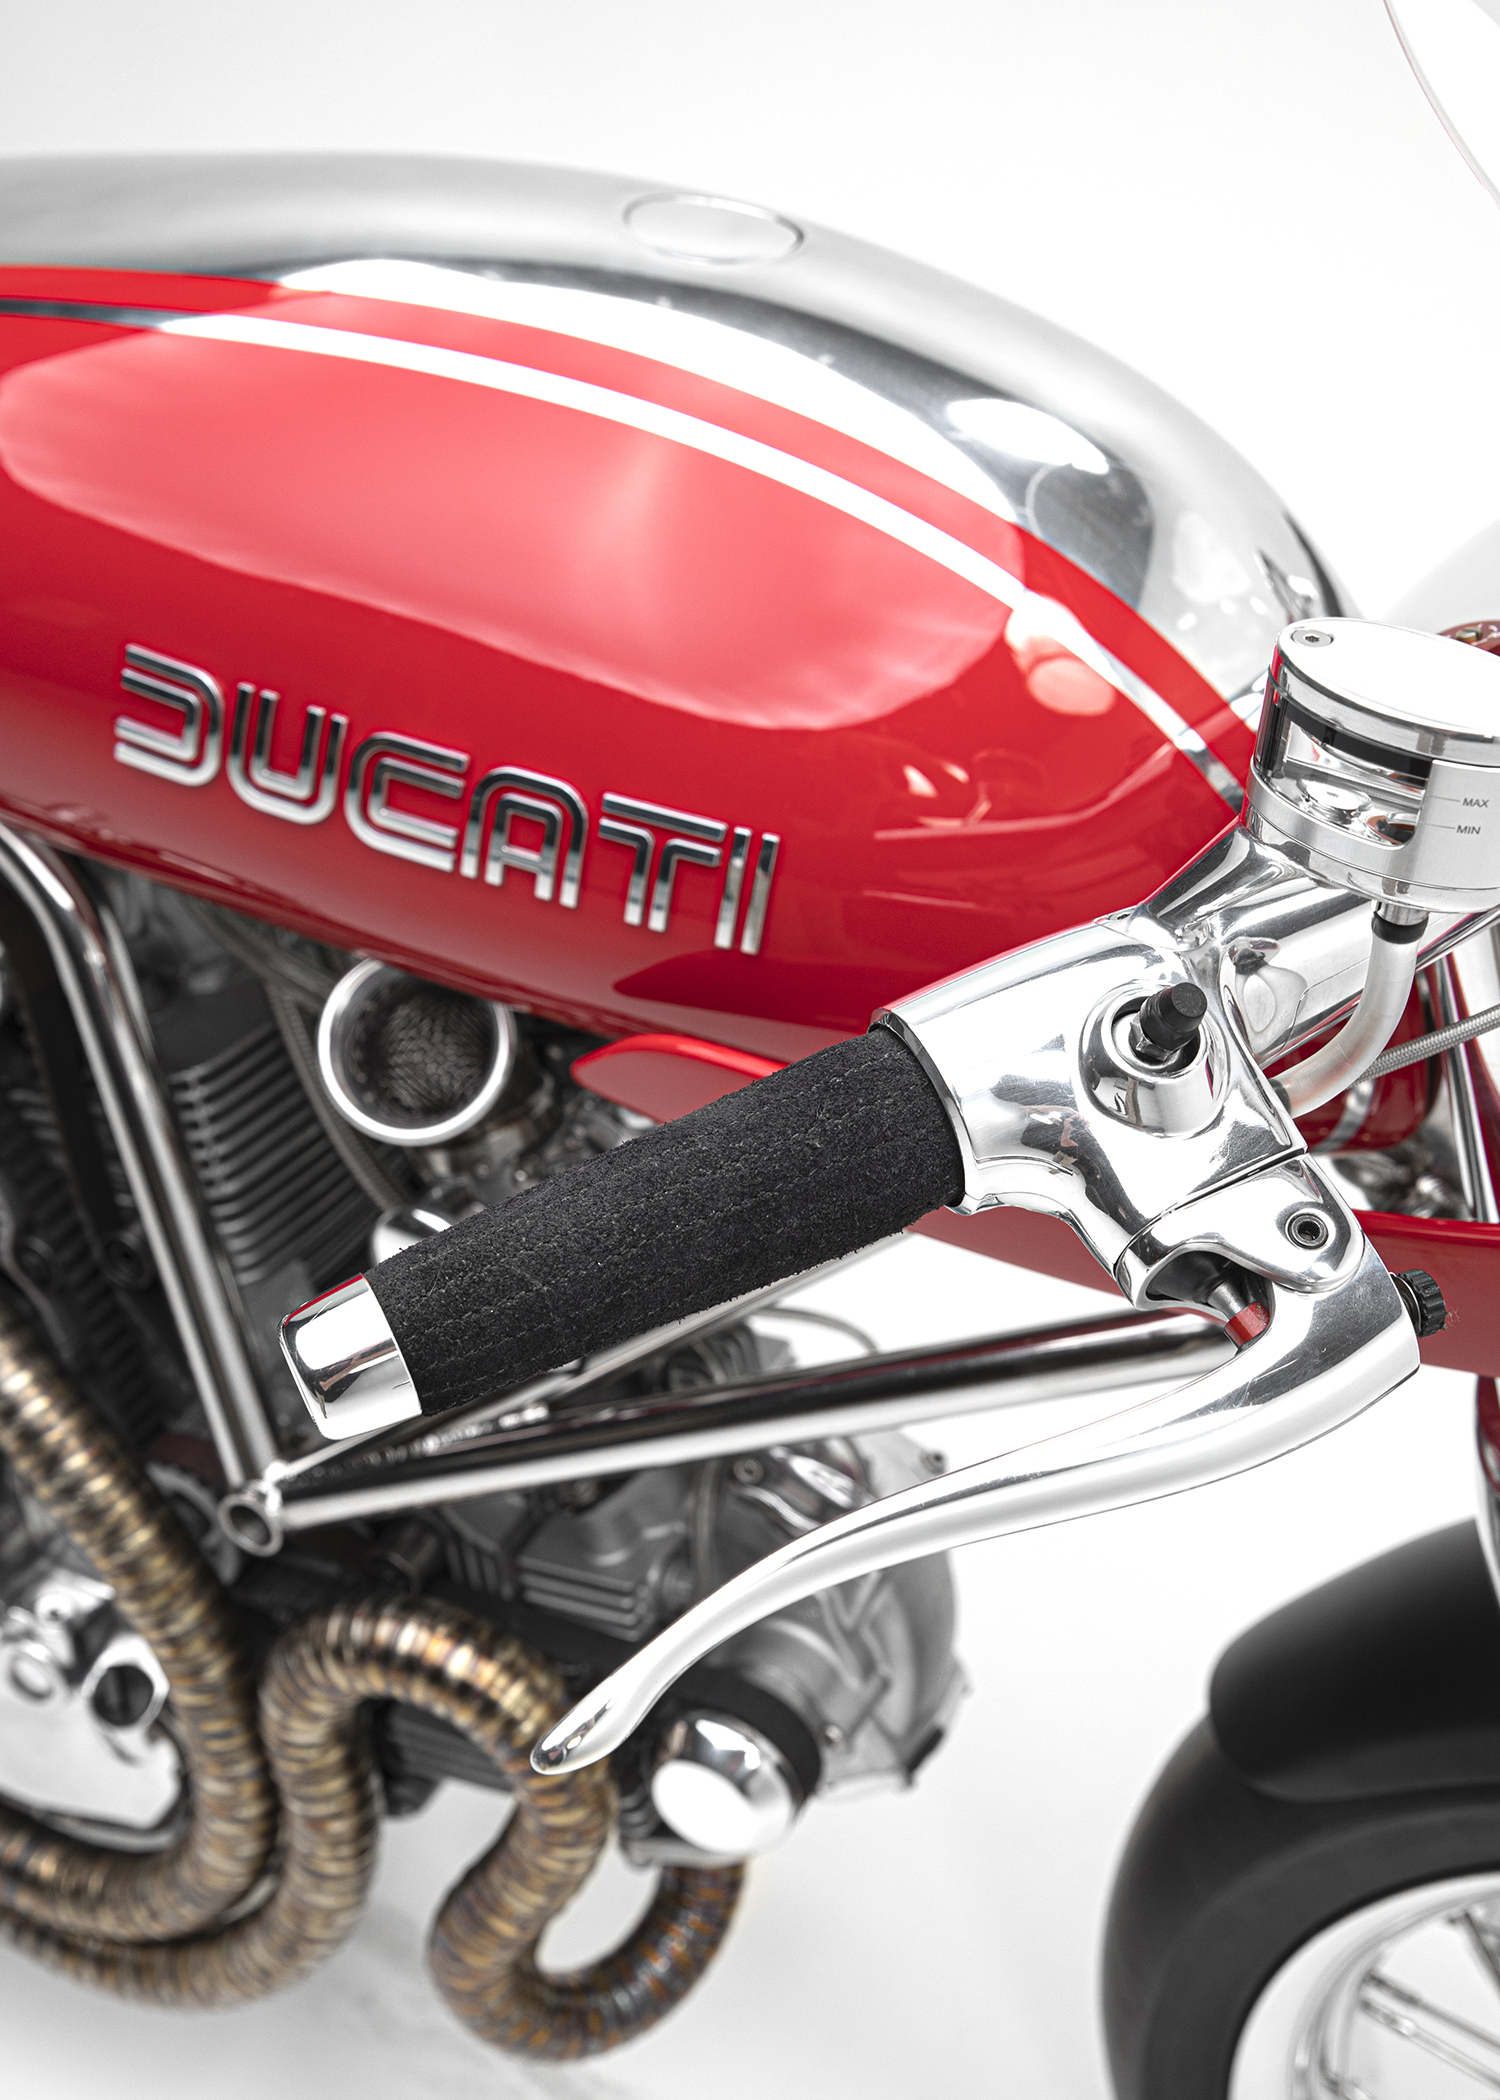 Ducati custom bike